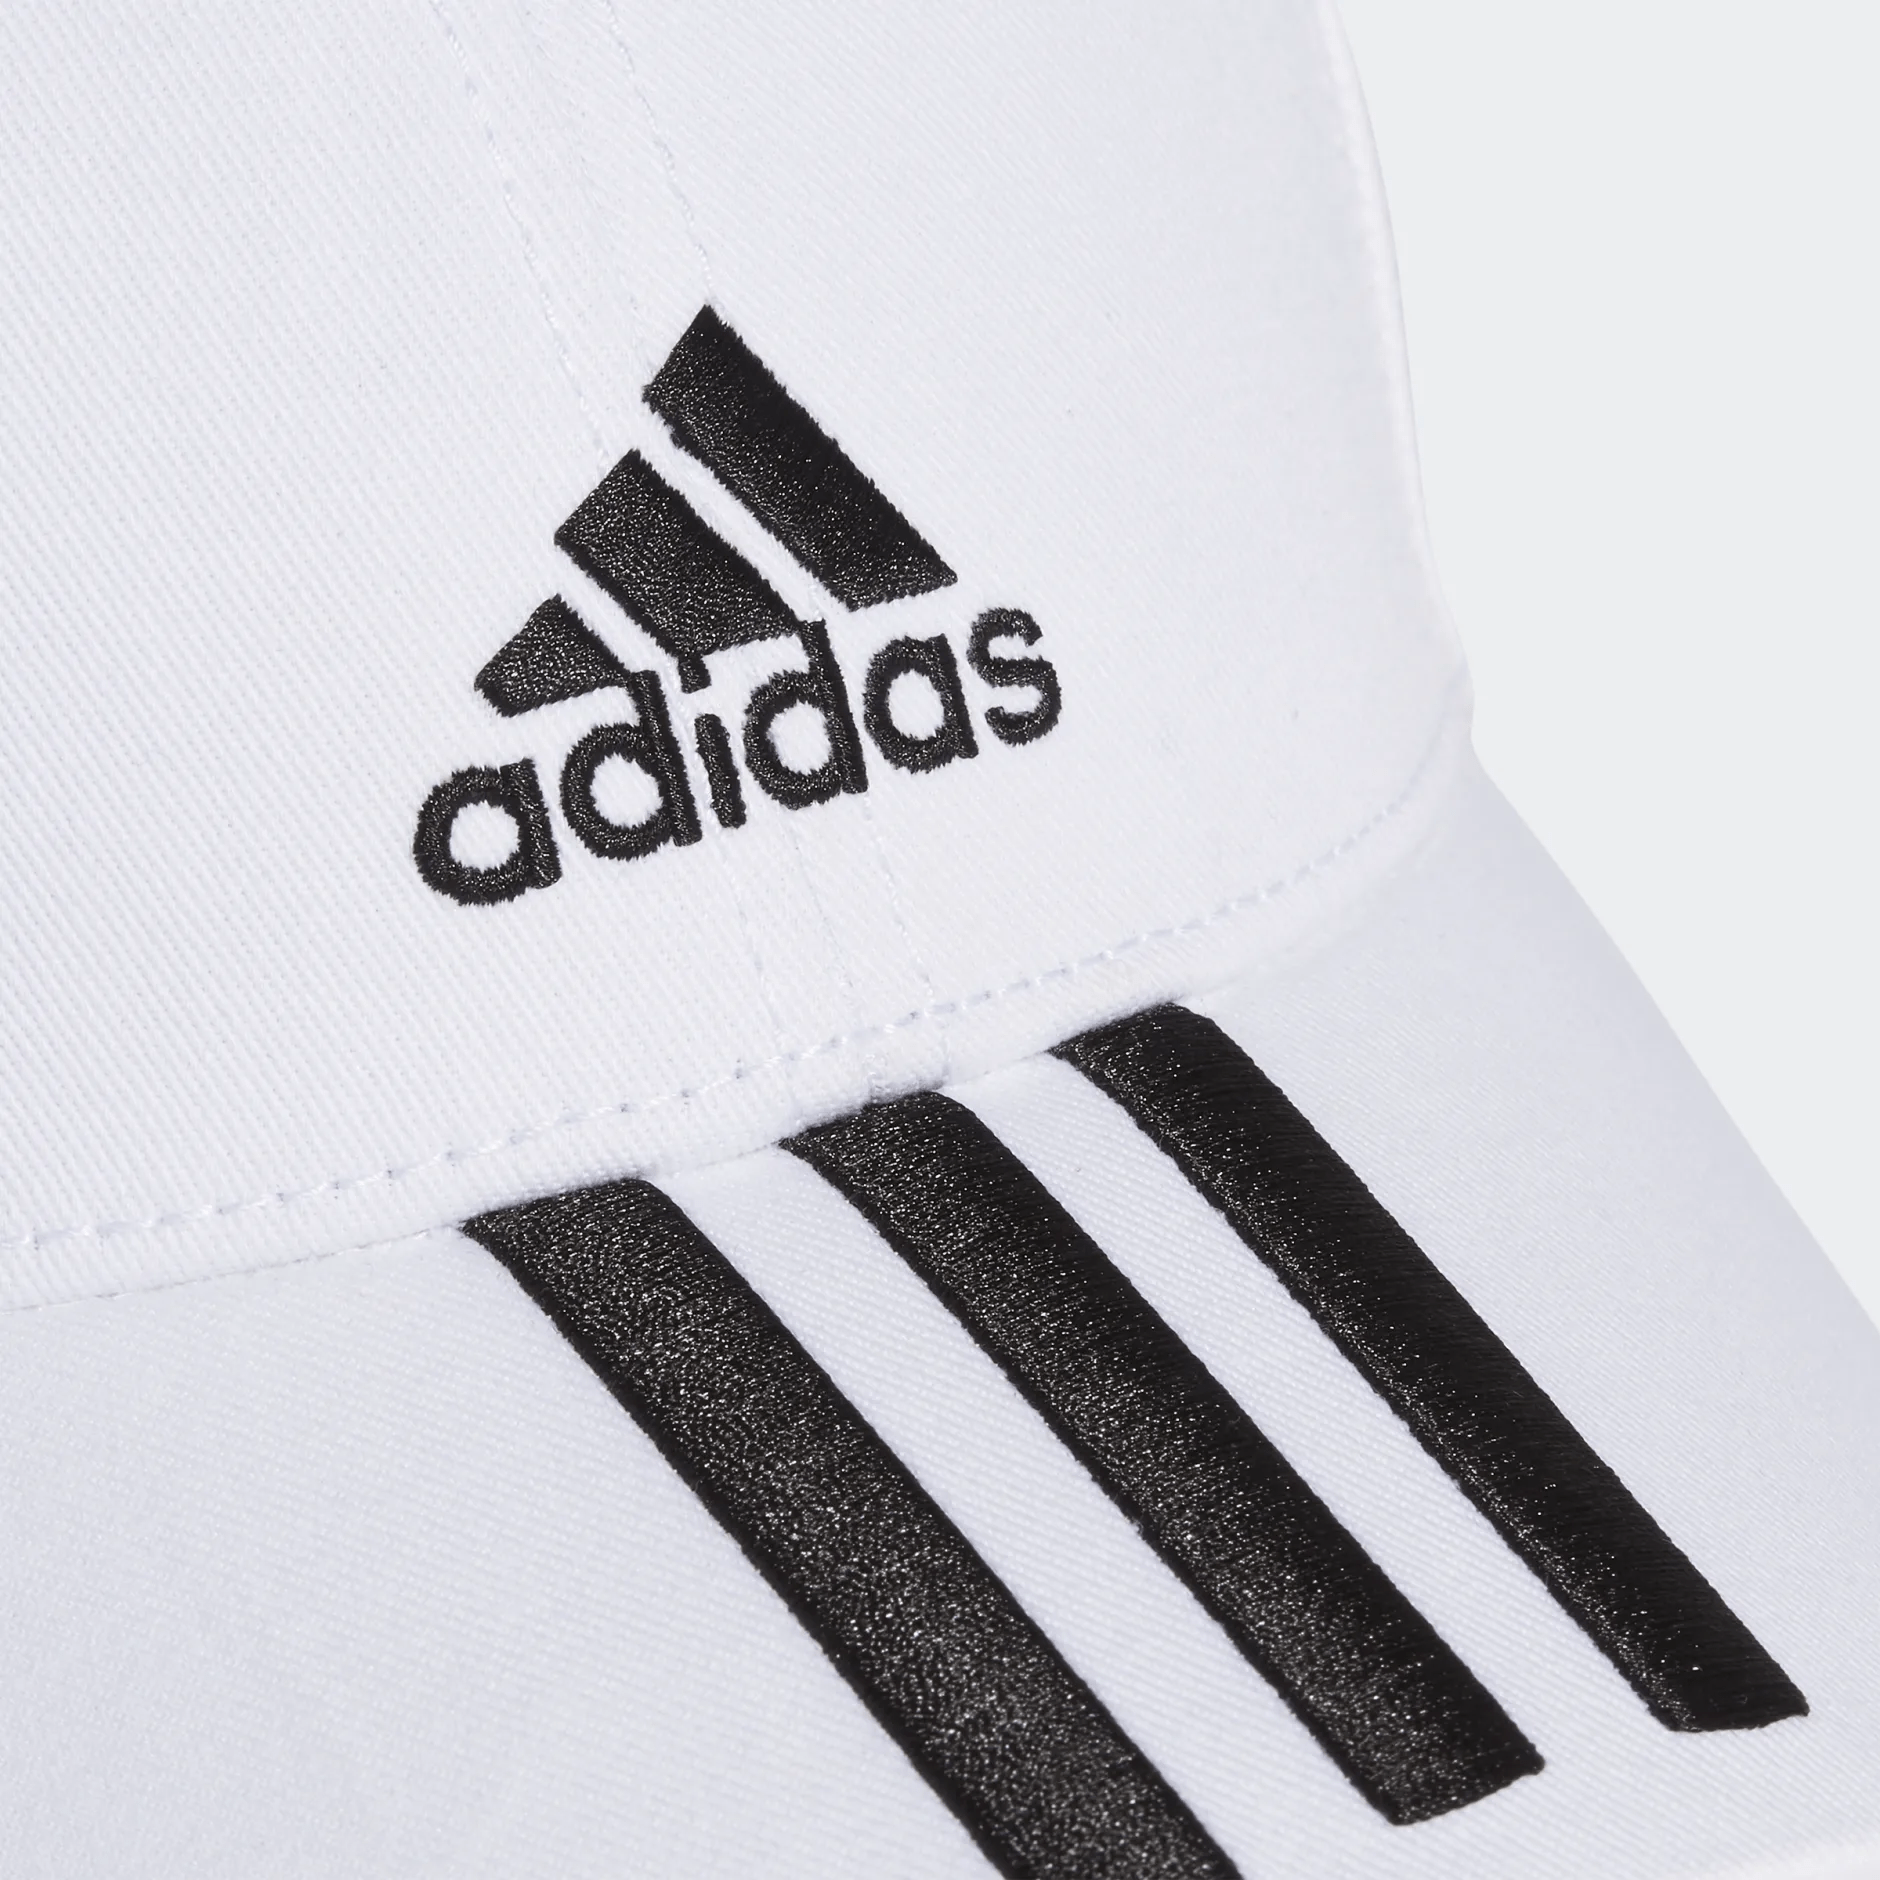 Adidas Baseball 3-Stripes Twill Cap